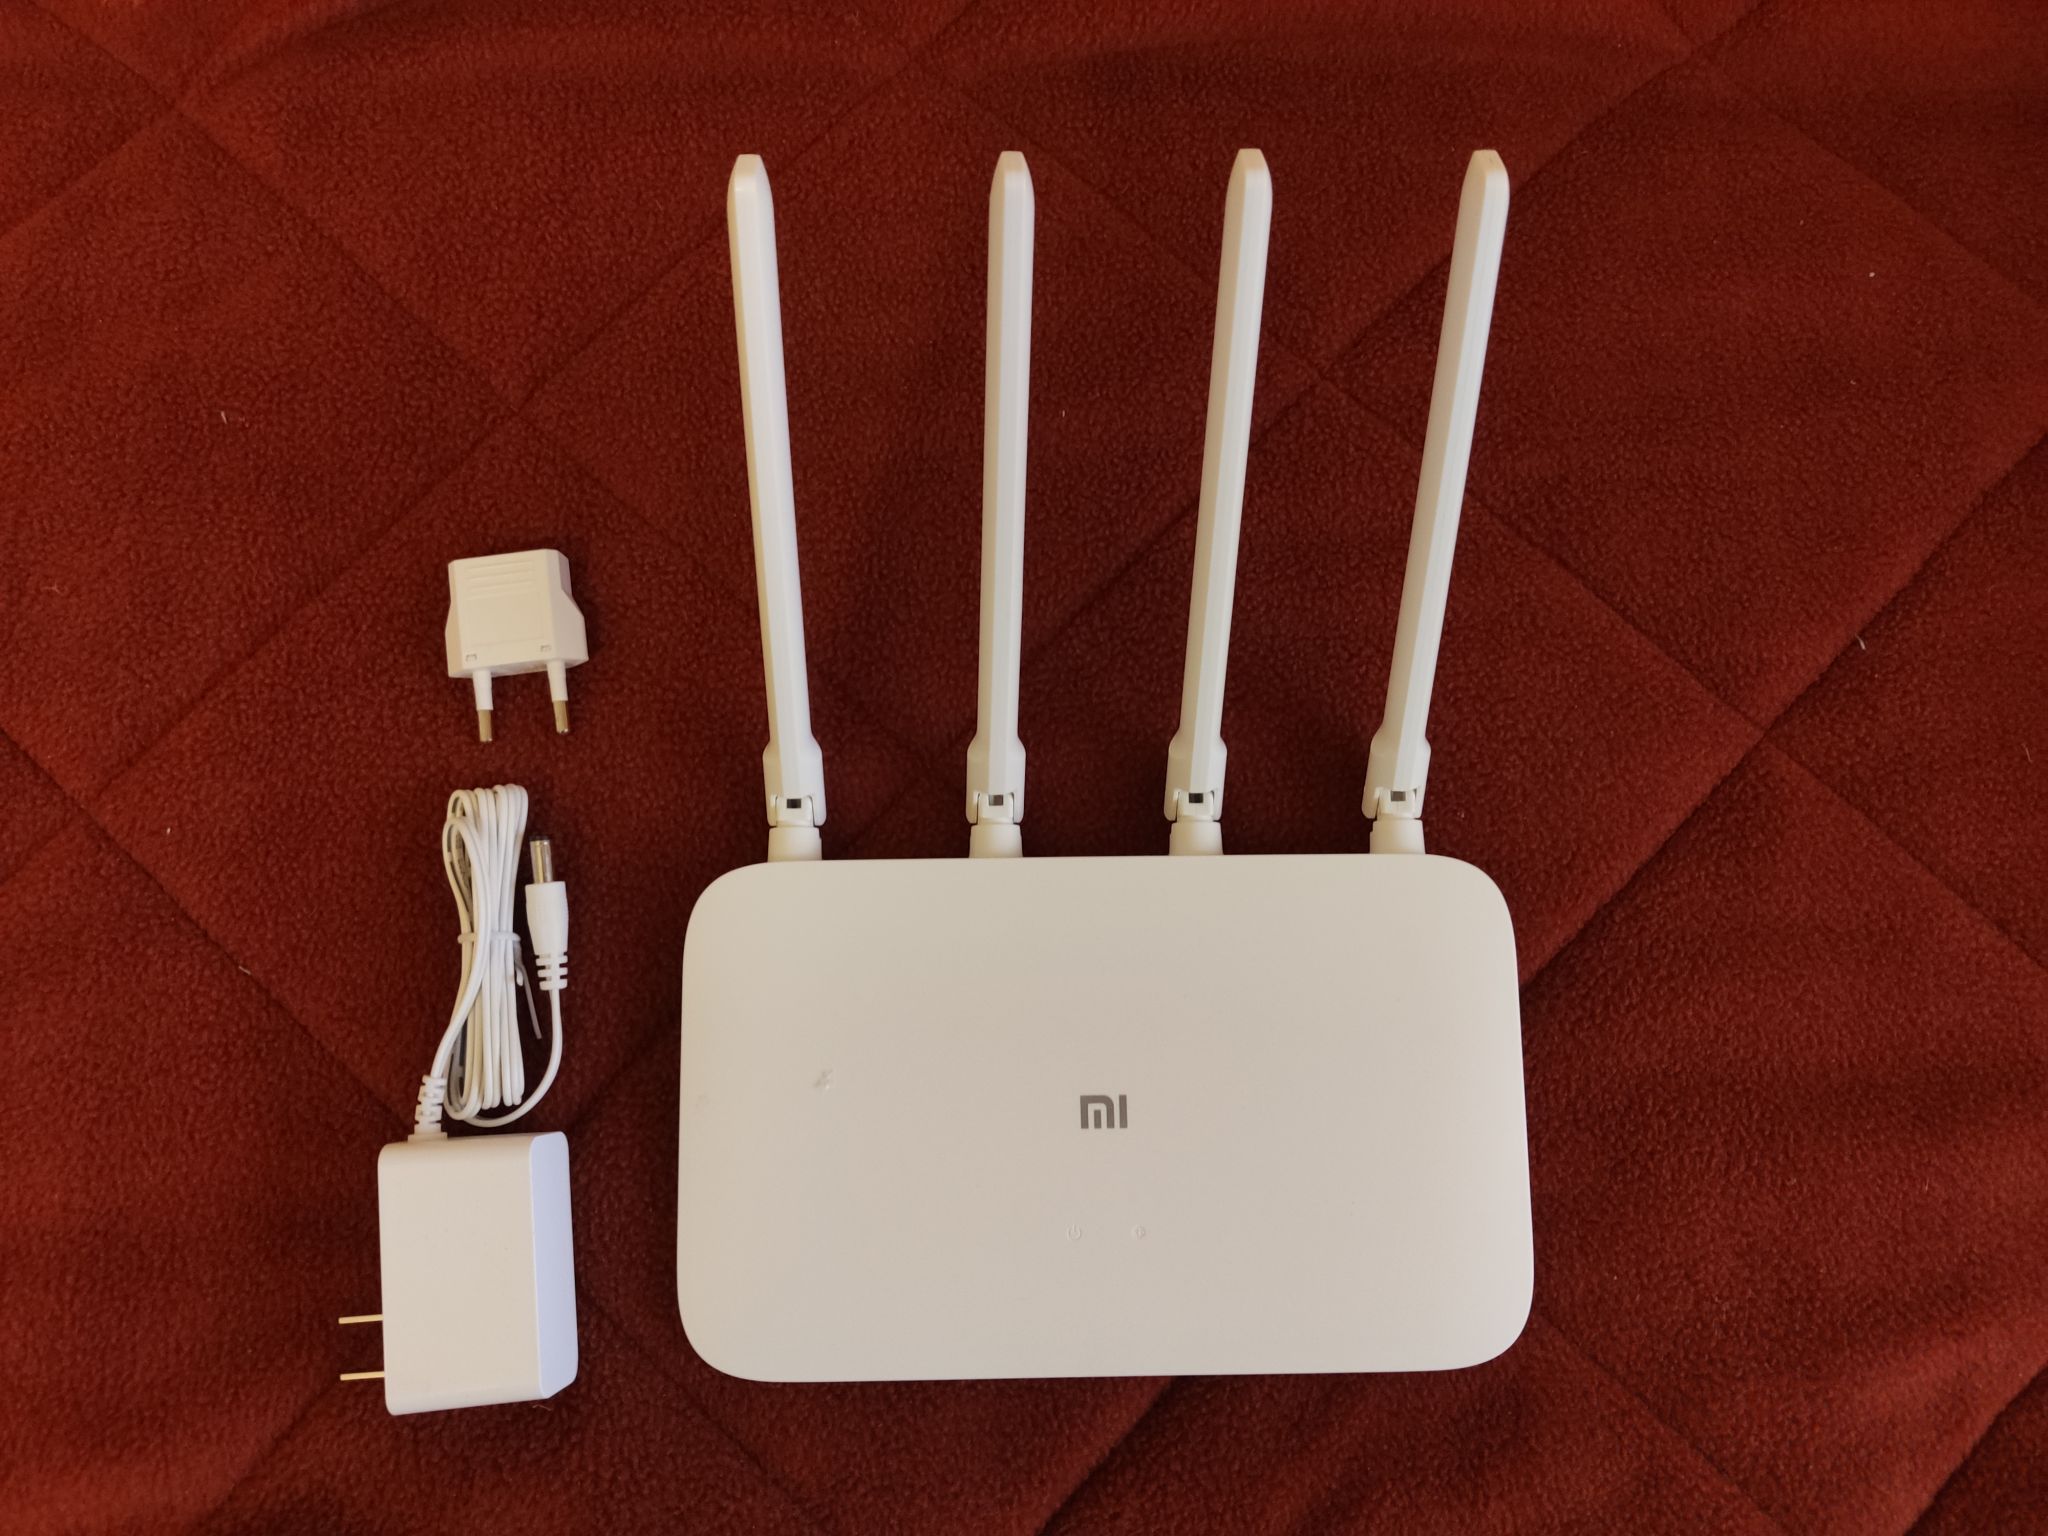 Wifi router 4a gigabit